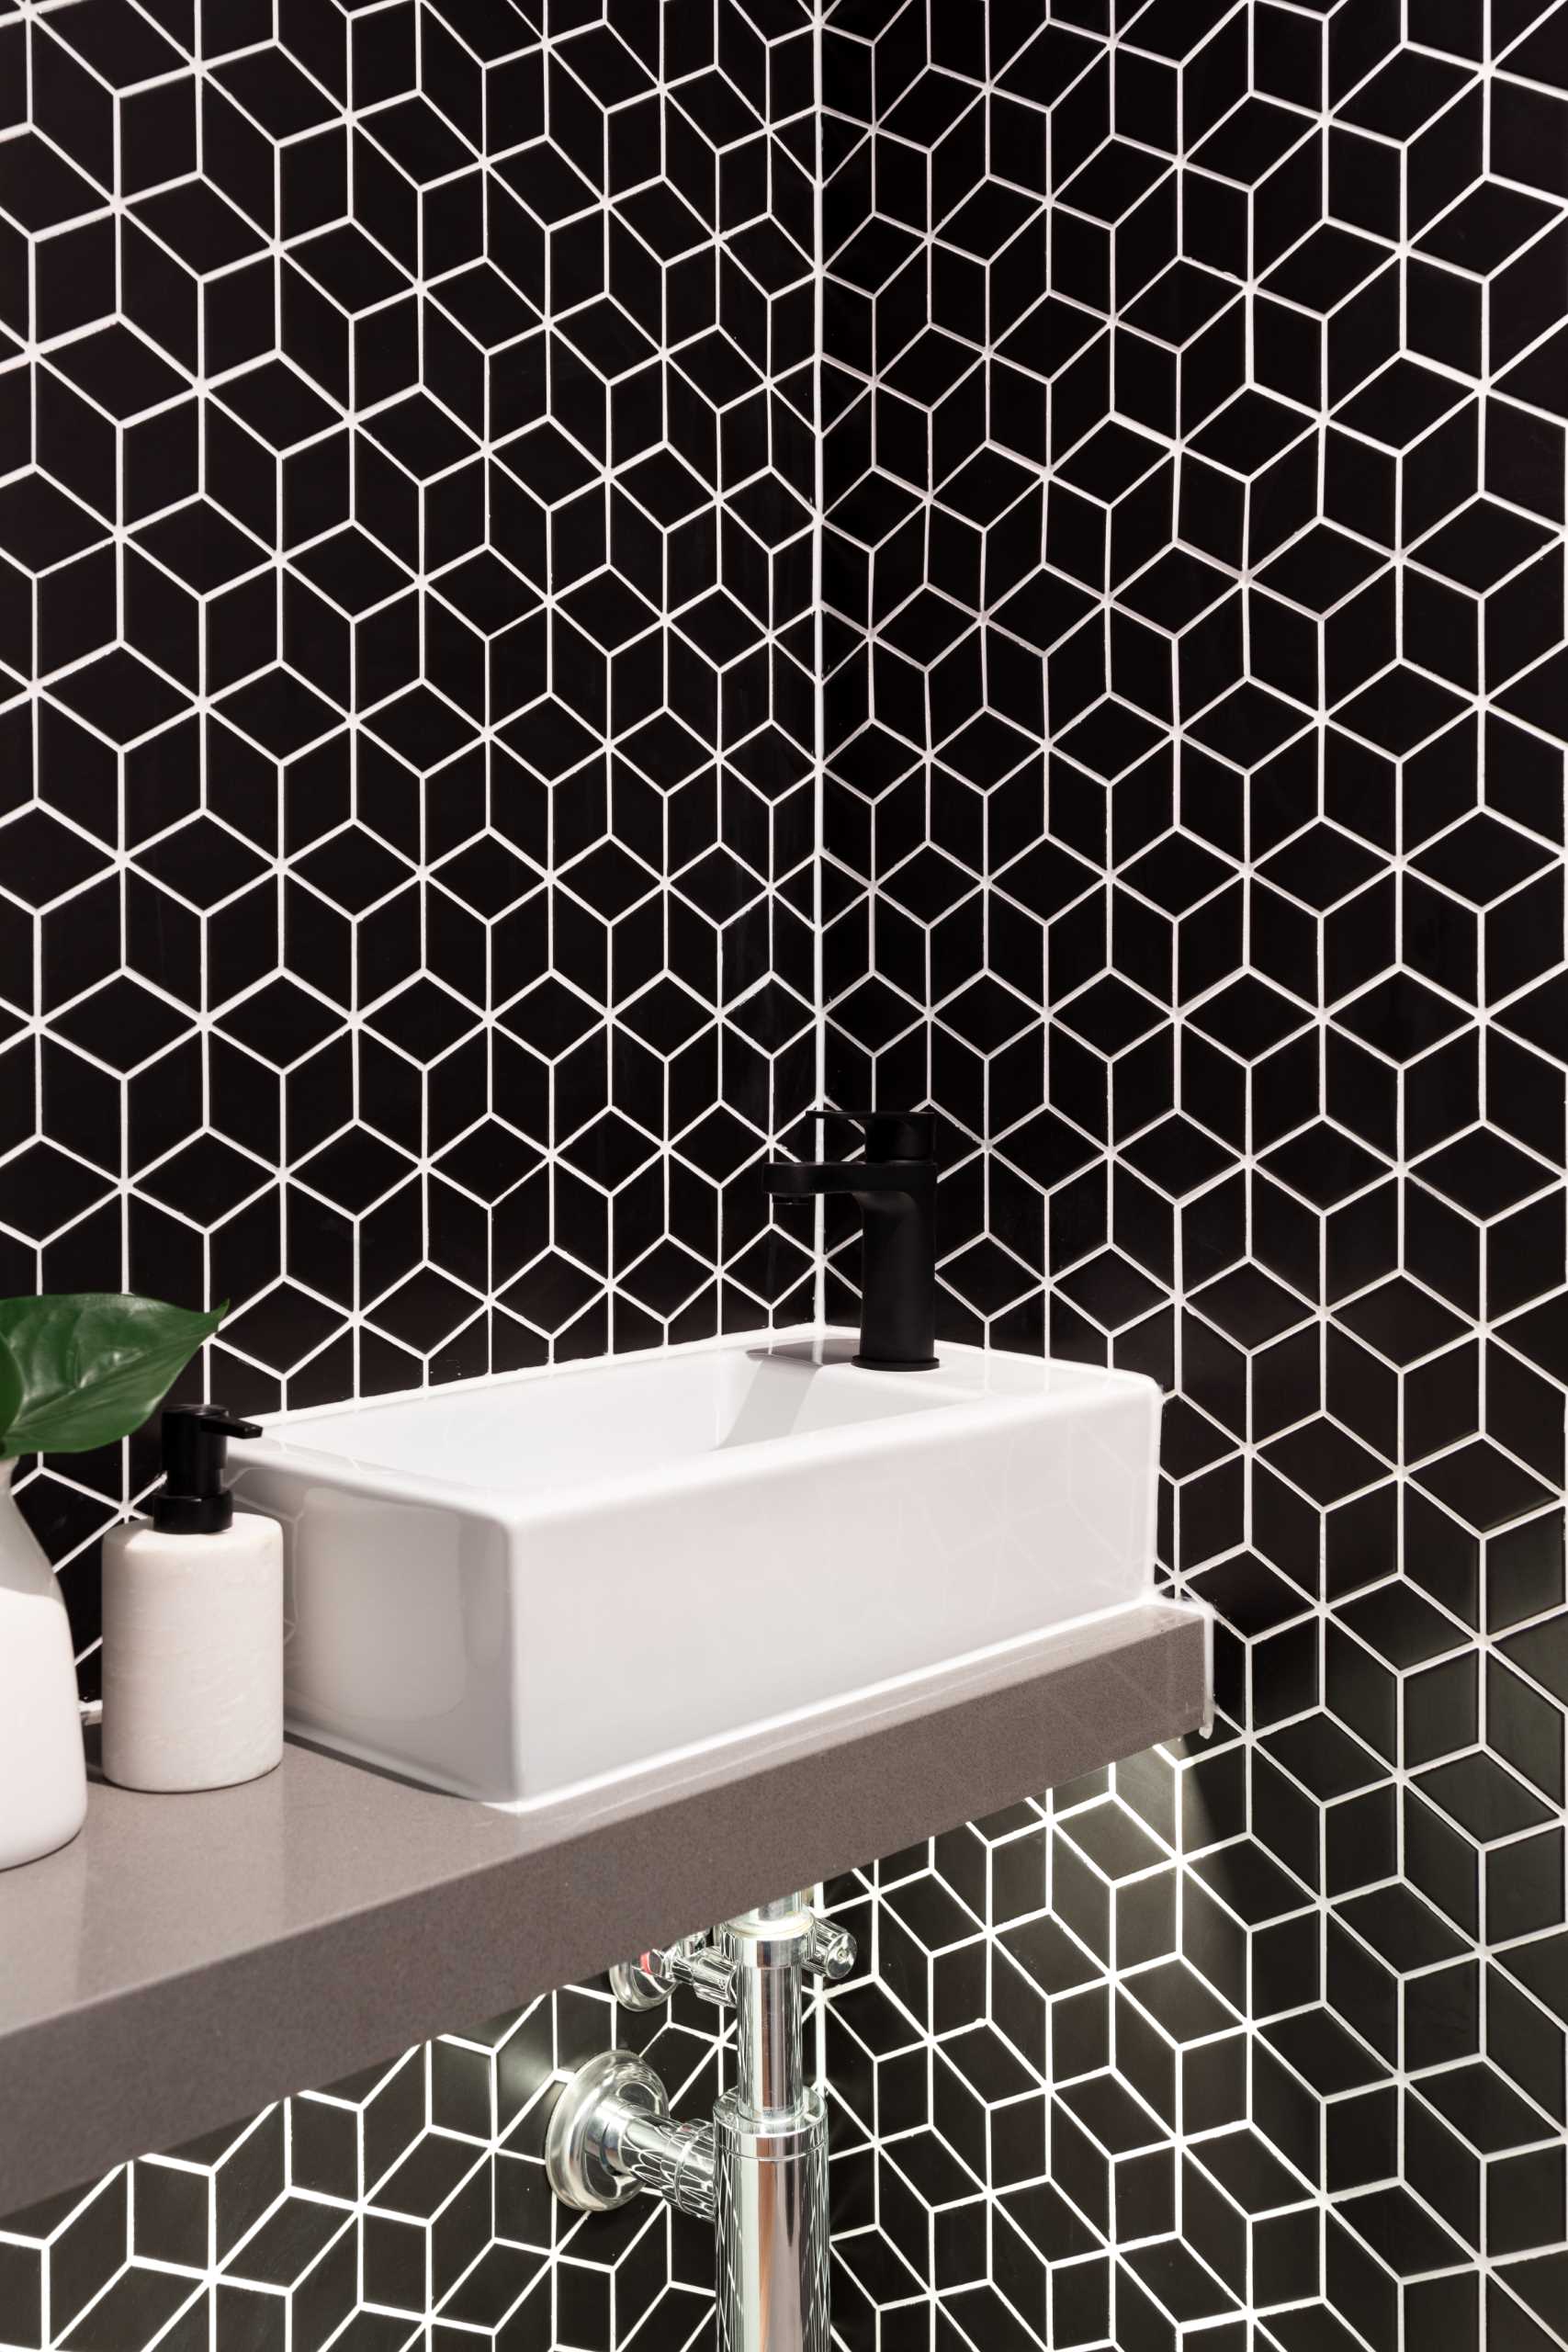 A powder room with bold black geometric tiles.